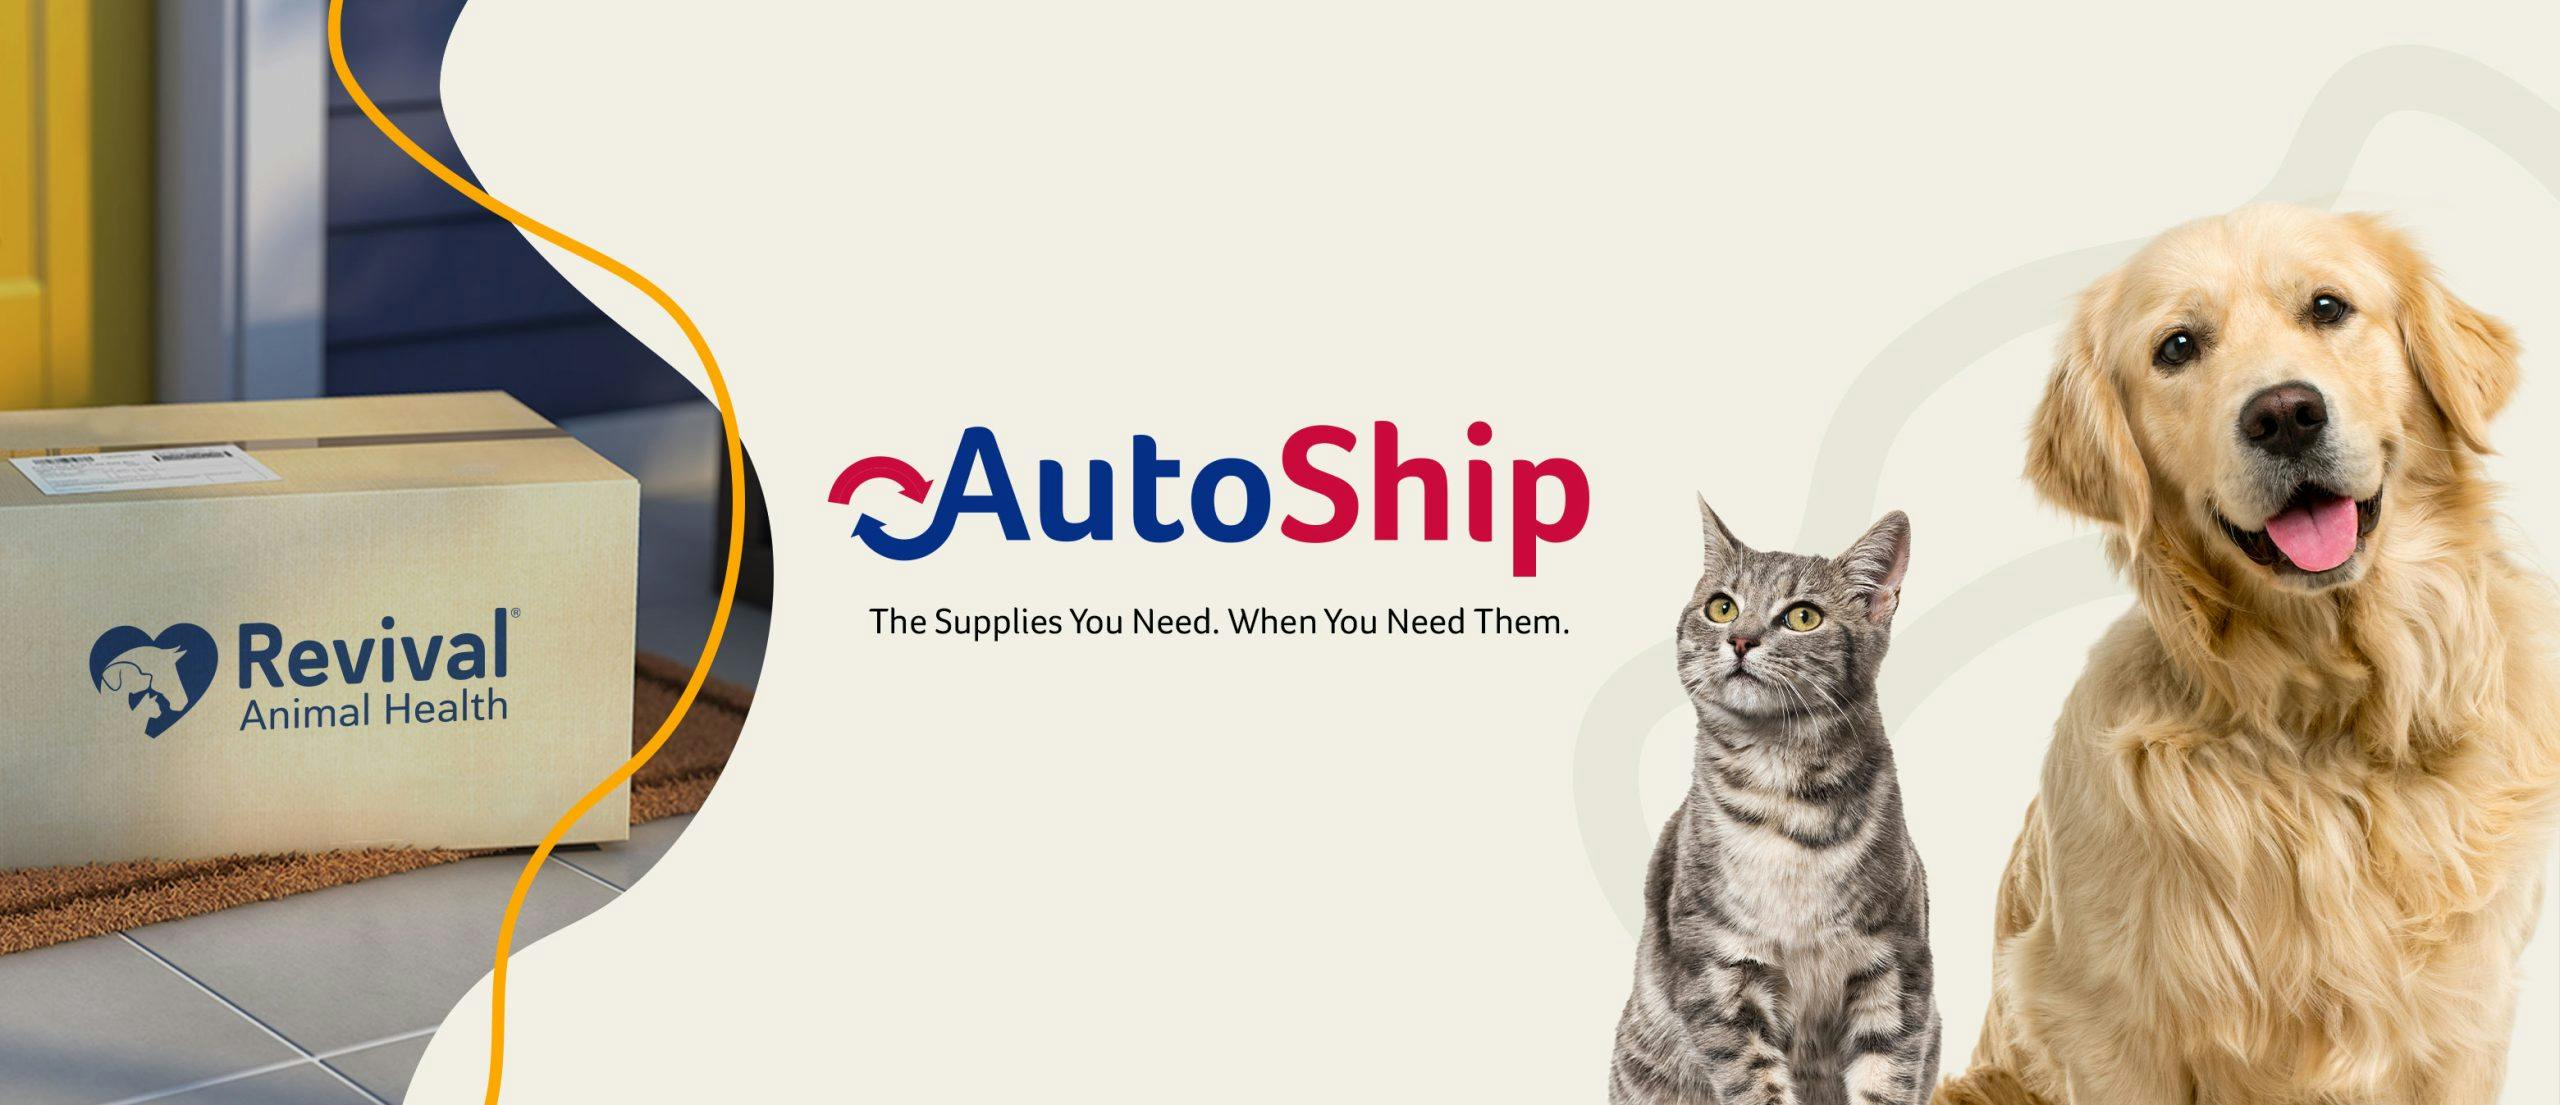 AutoShip and FAQ